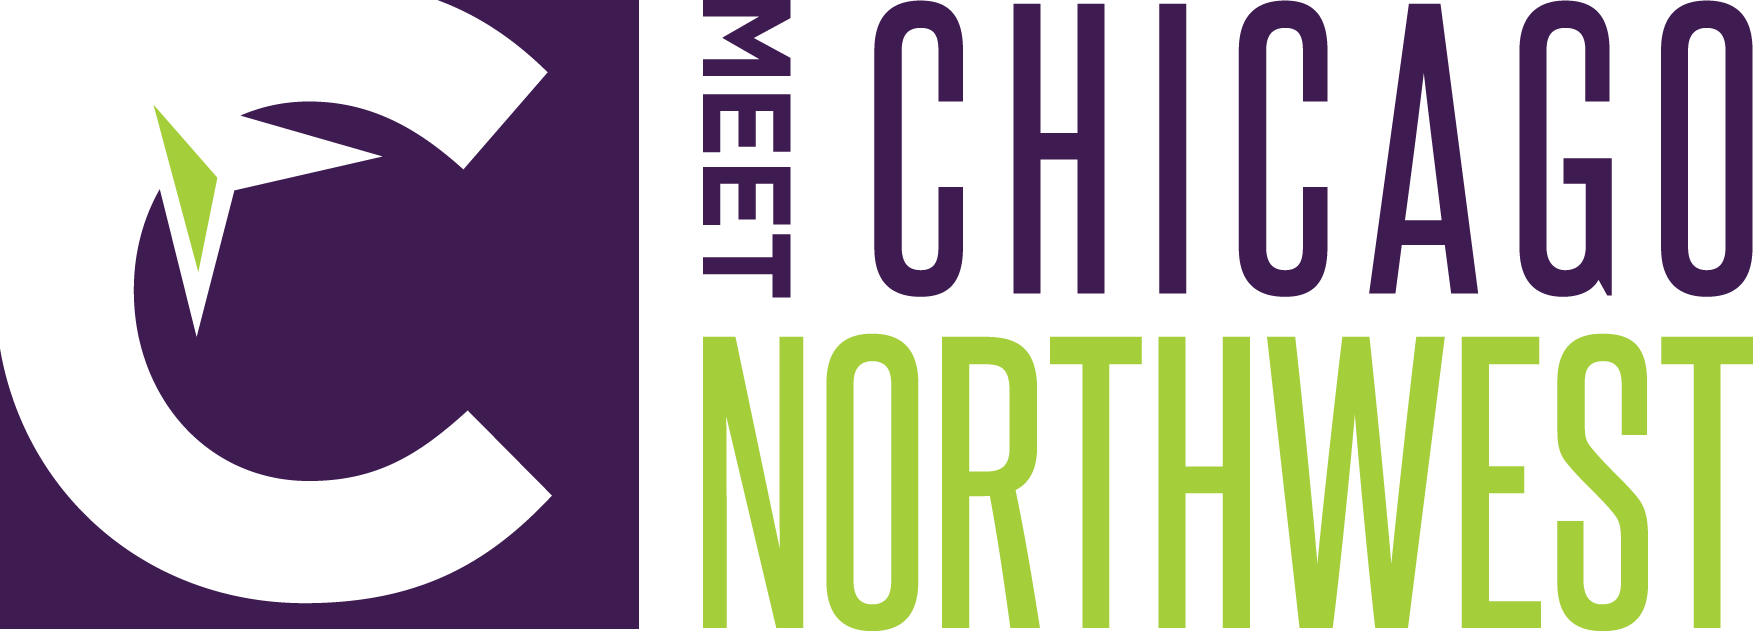 Chicago Northwest Logo